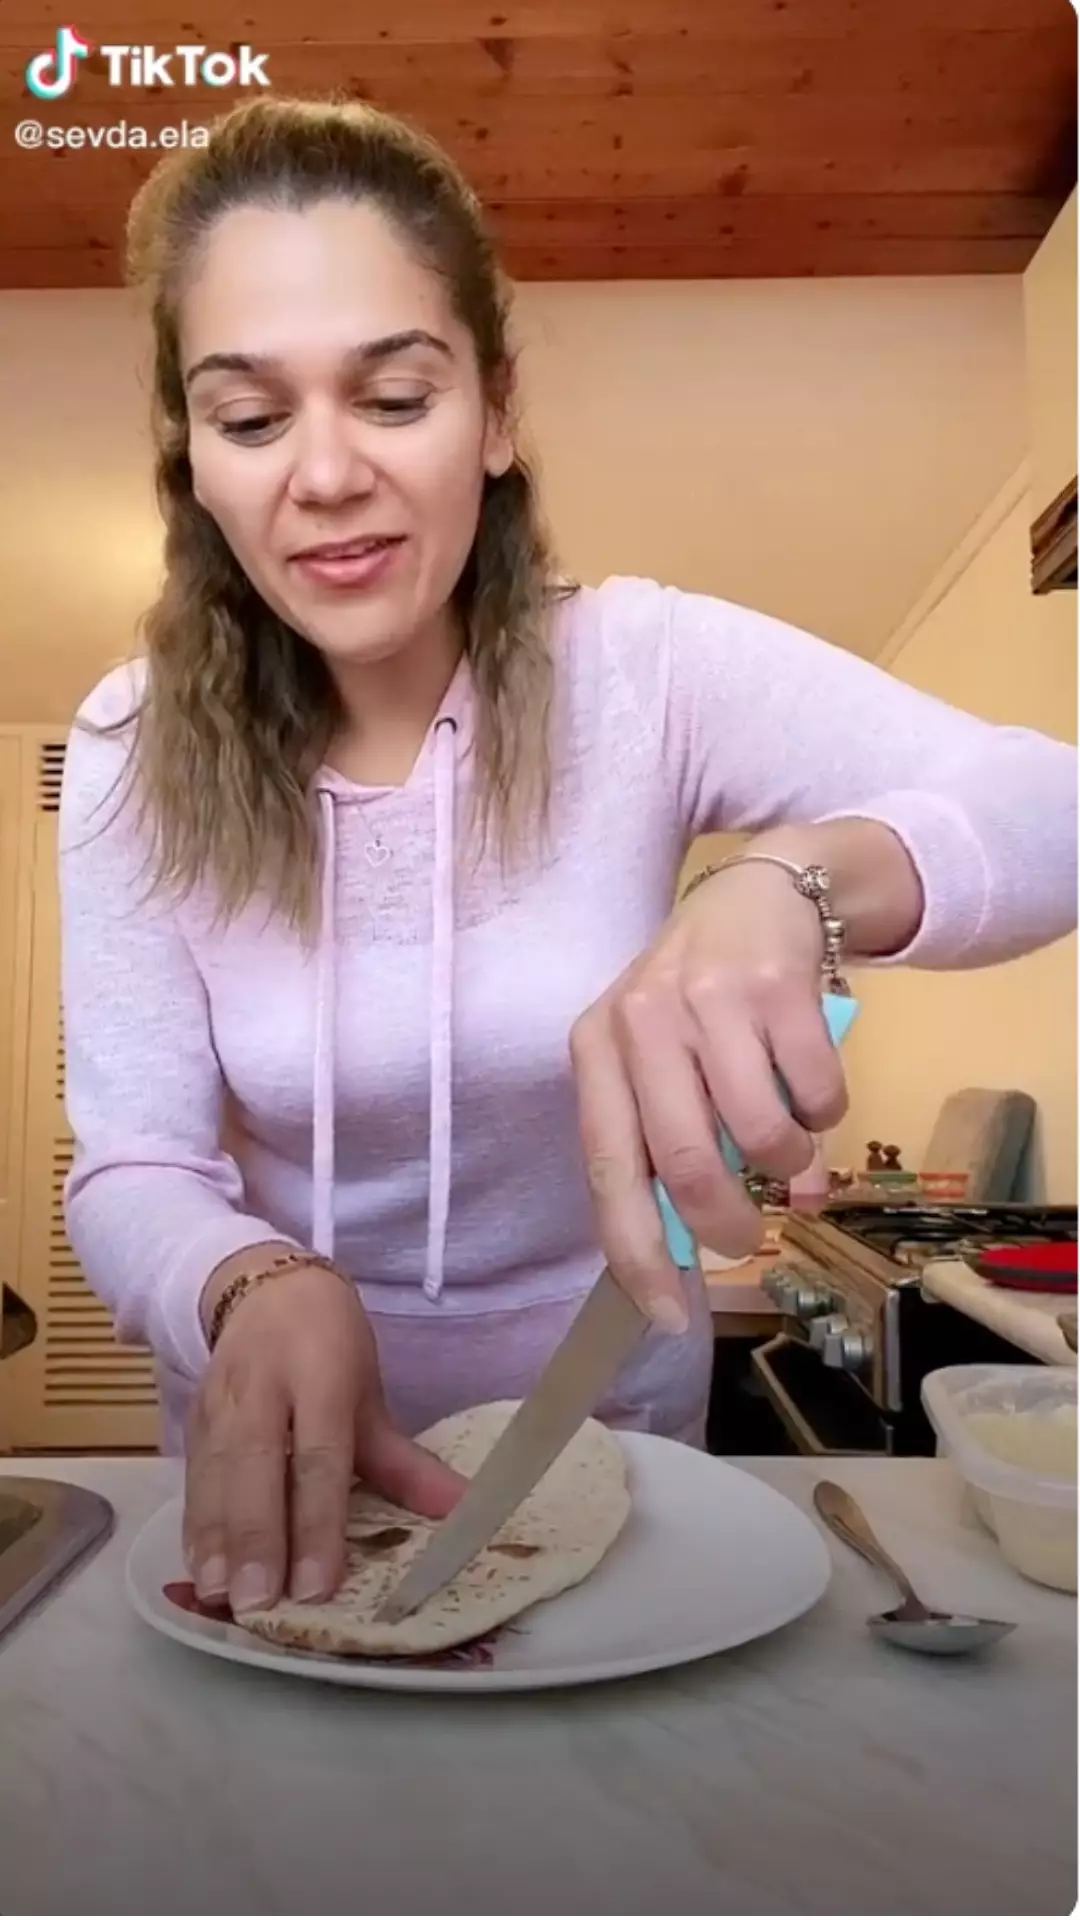 Sevda shows TikTok how she cuts pitta bread (